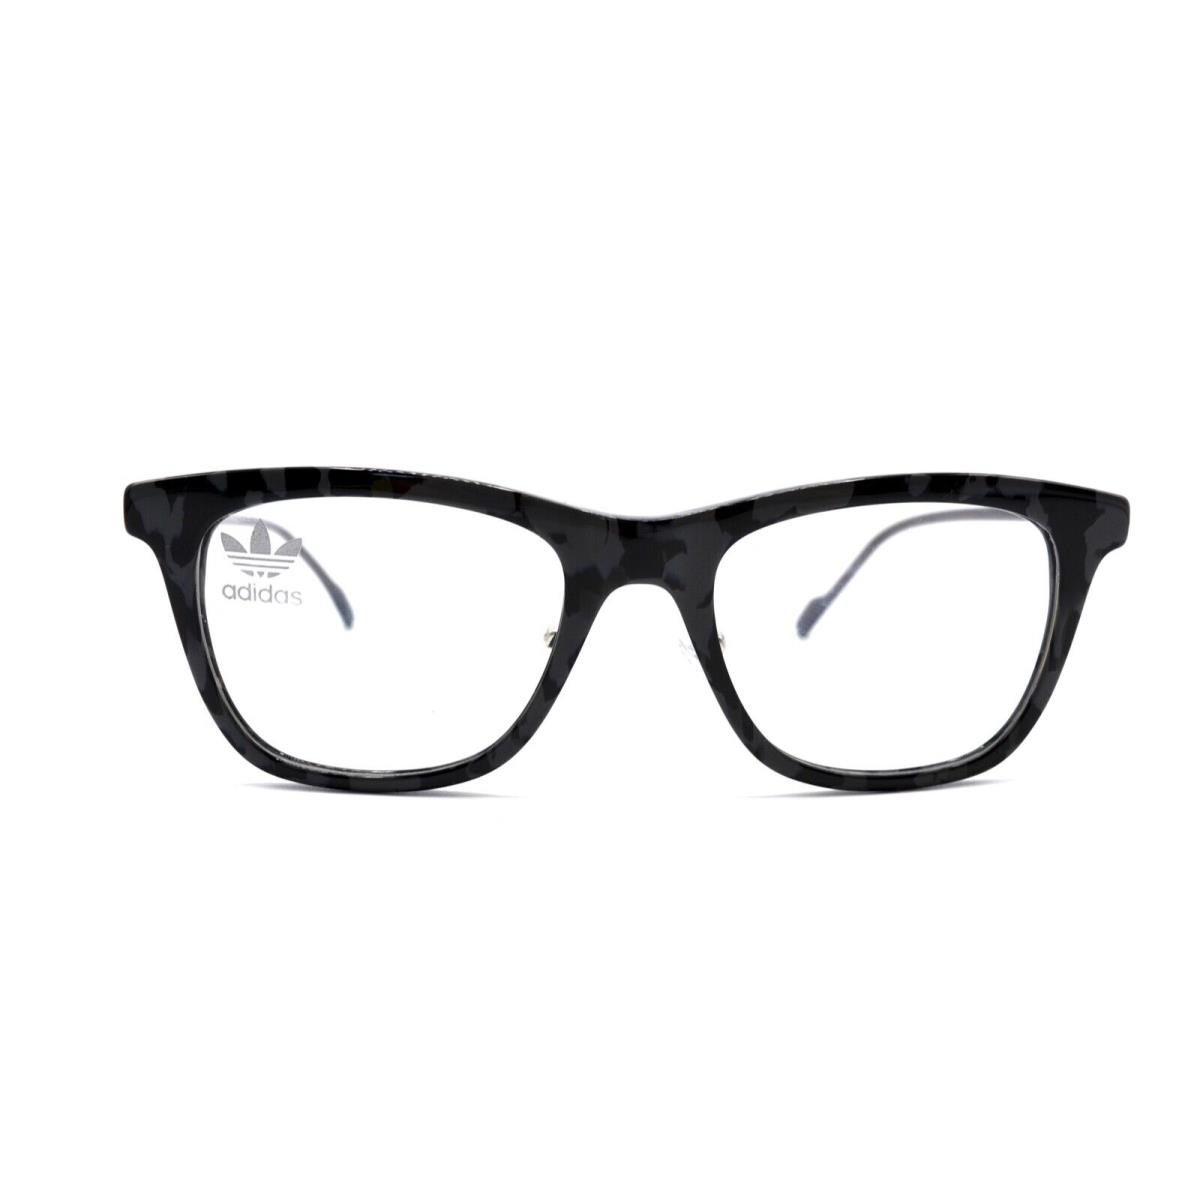 Adidas eyeglasses  - BLACK GREY SPOTTED Frame 0